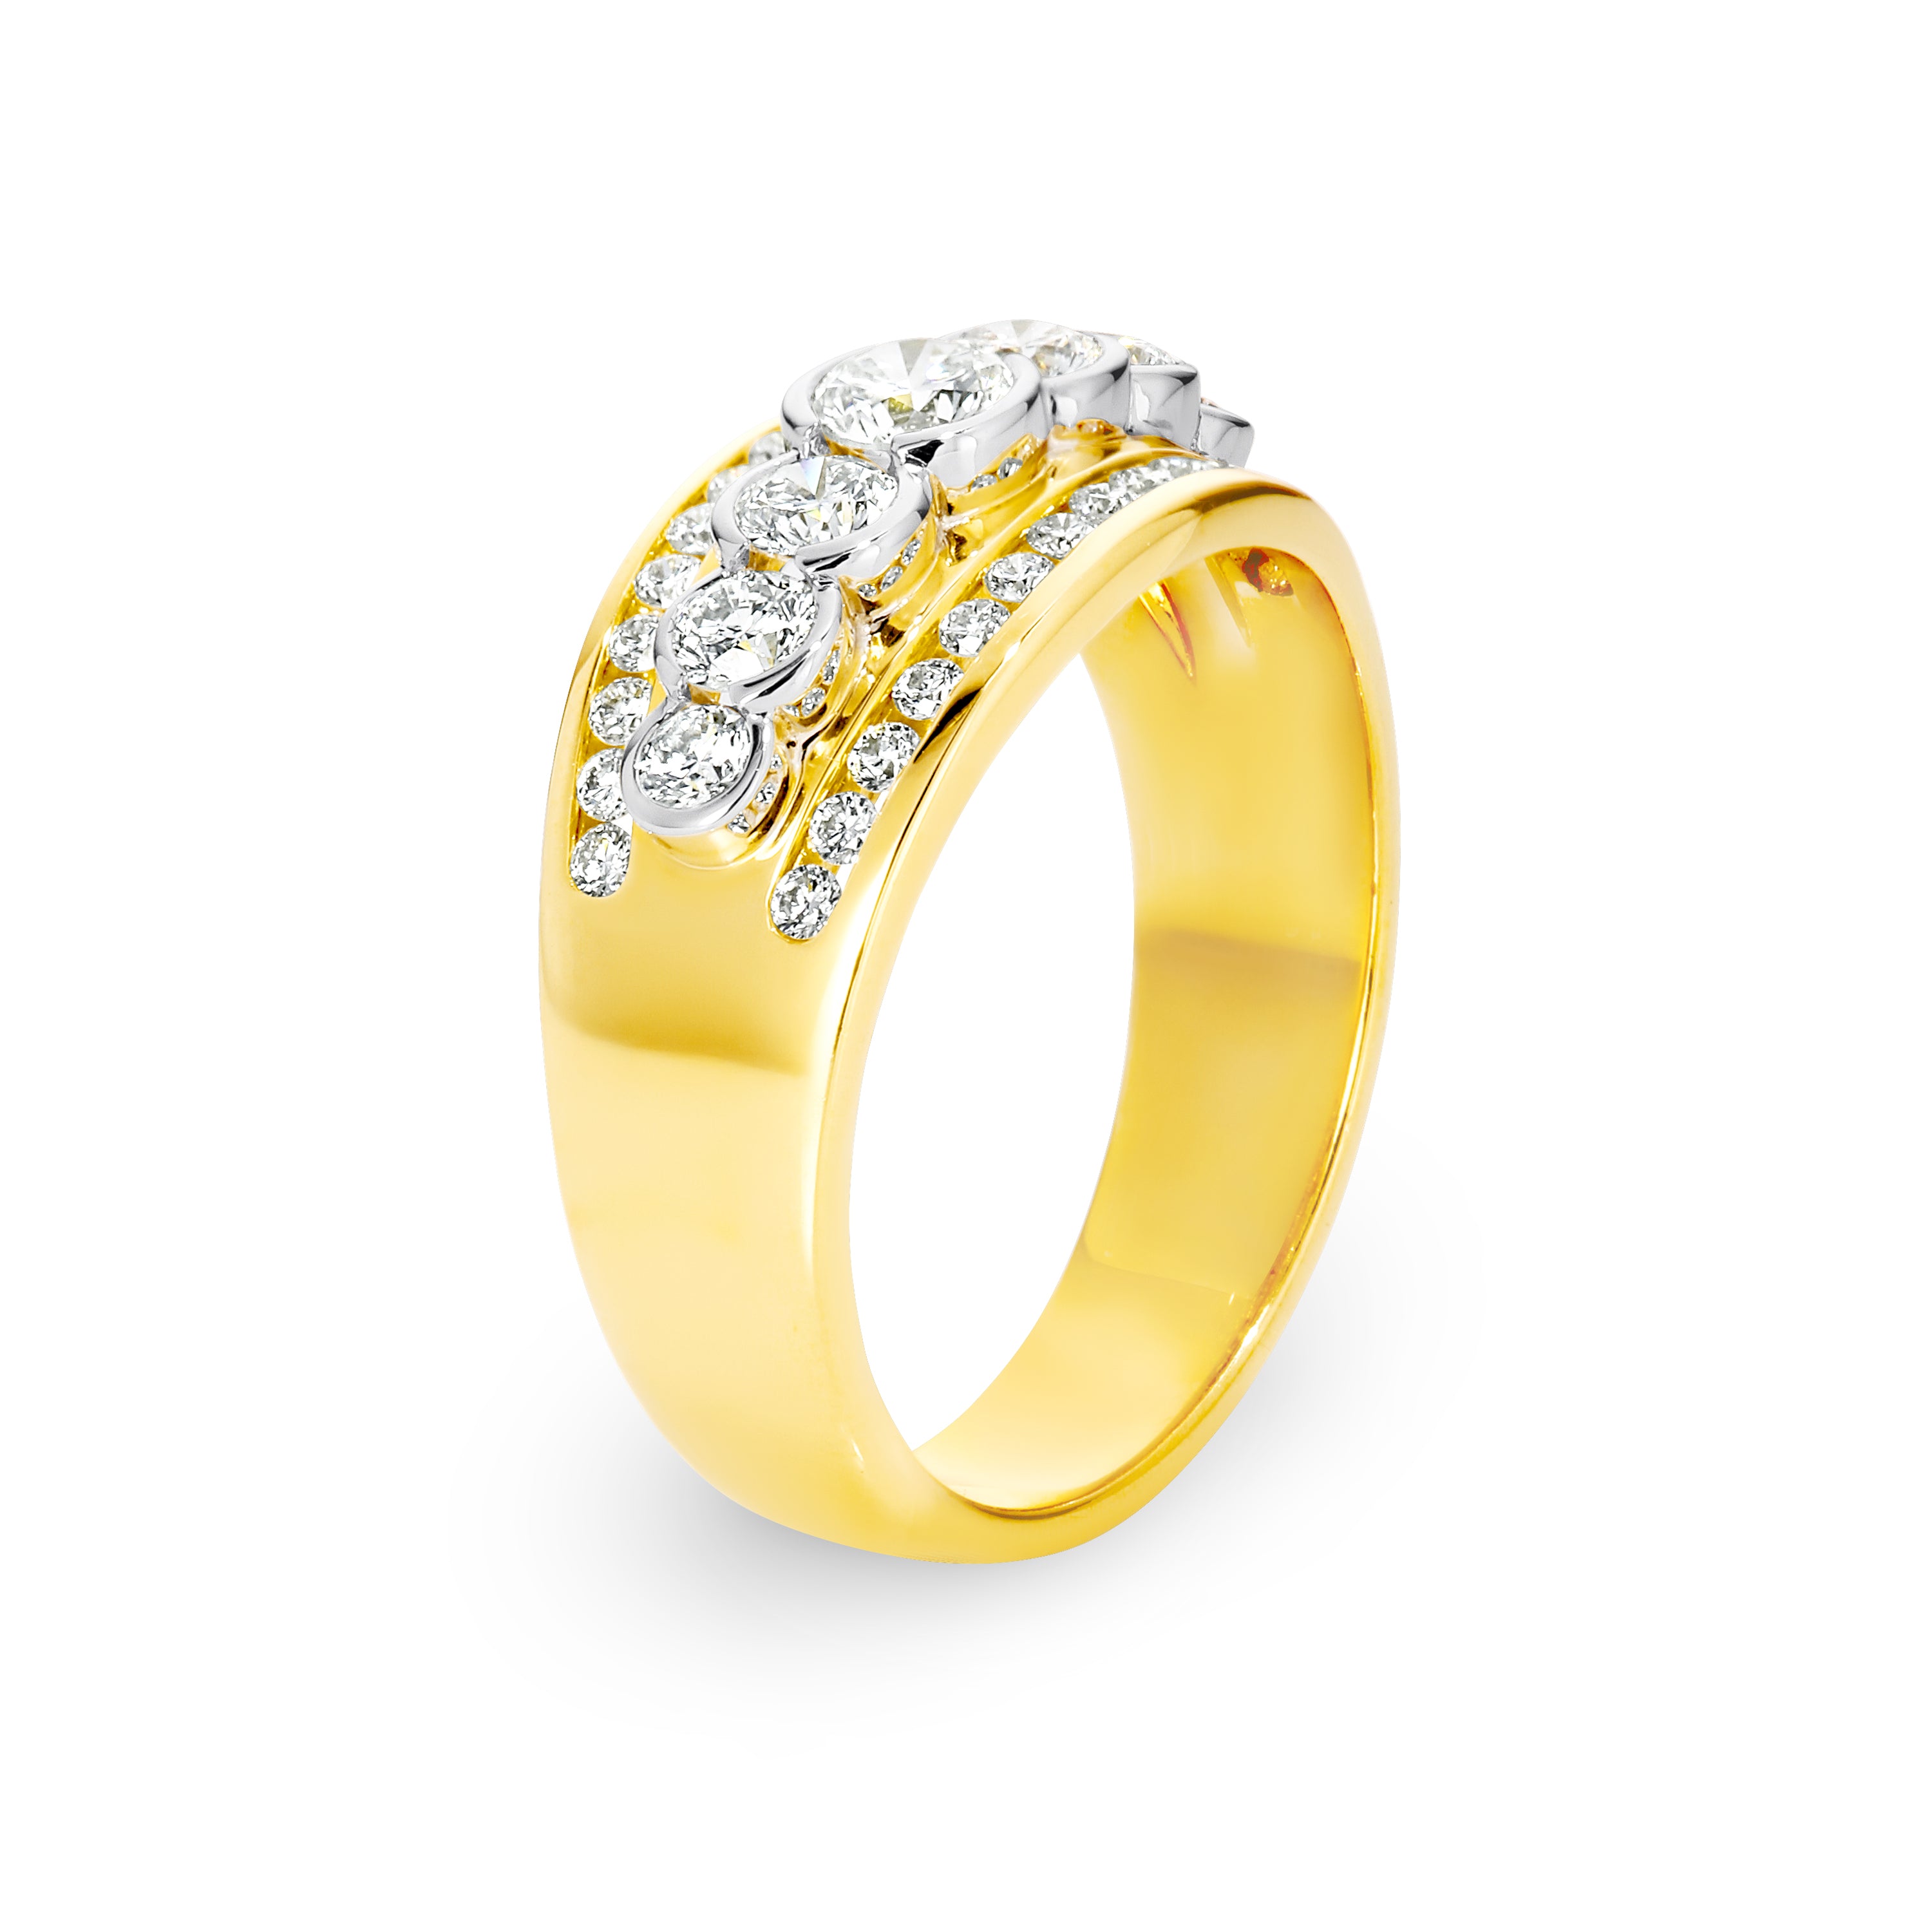 18ct Yellow Gold 'Victoria' Diamond Ring